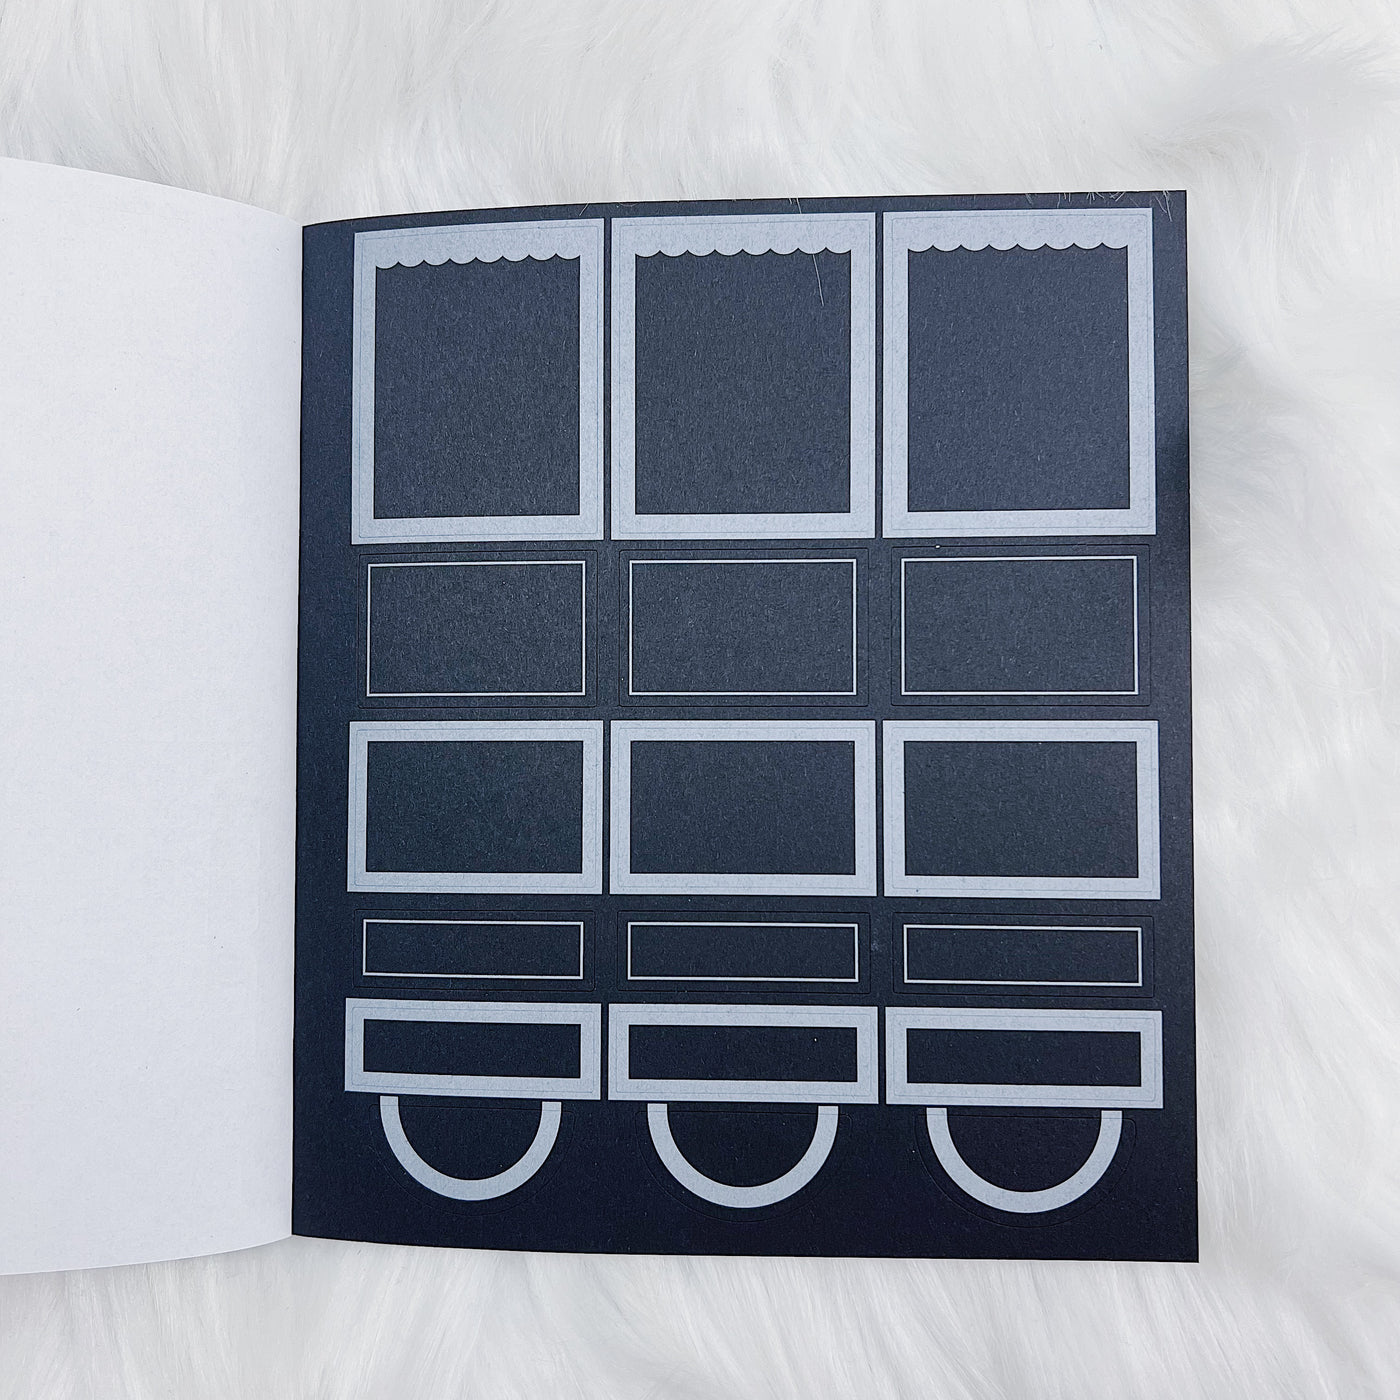 Black Out 3.0 Sticker Book | Black Matte Sticker Paper | 10 Pages